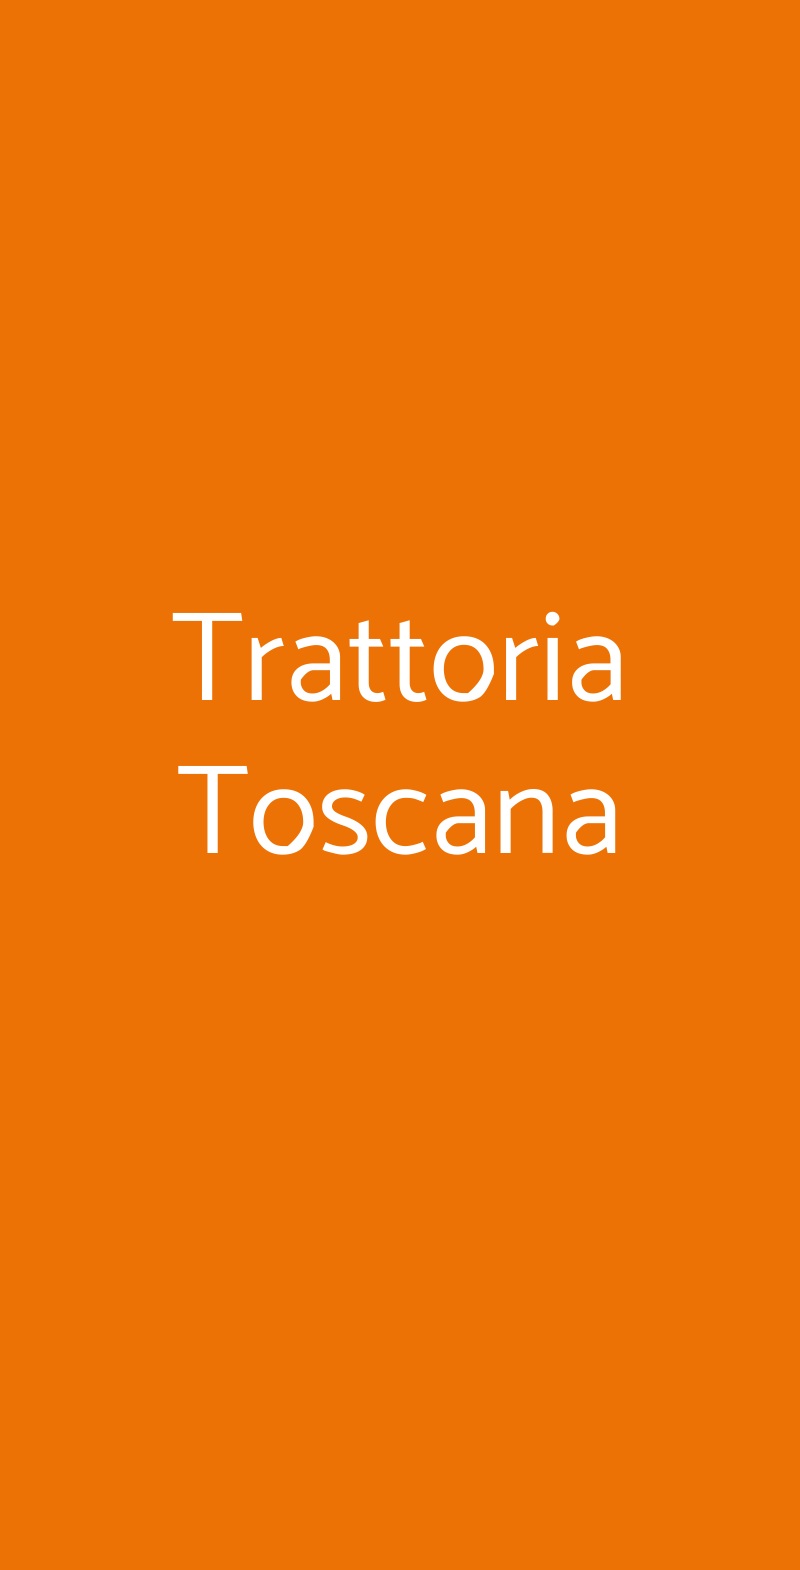 Trattoria Toscana Milano menù 1 pagina